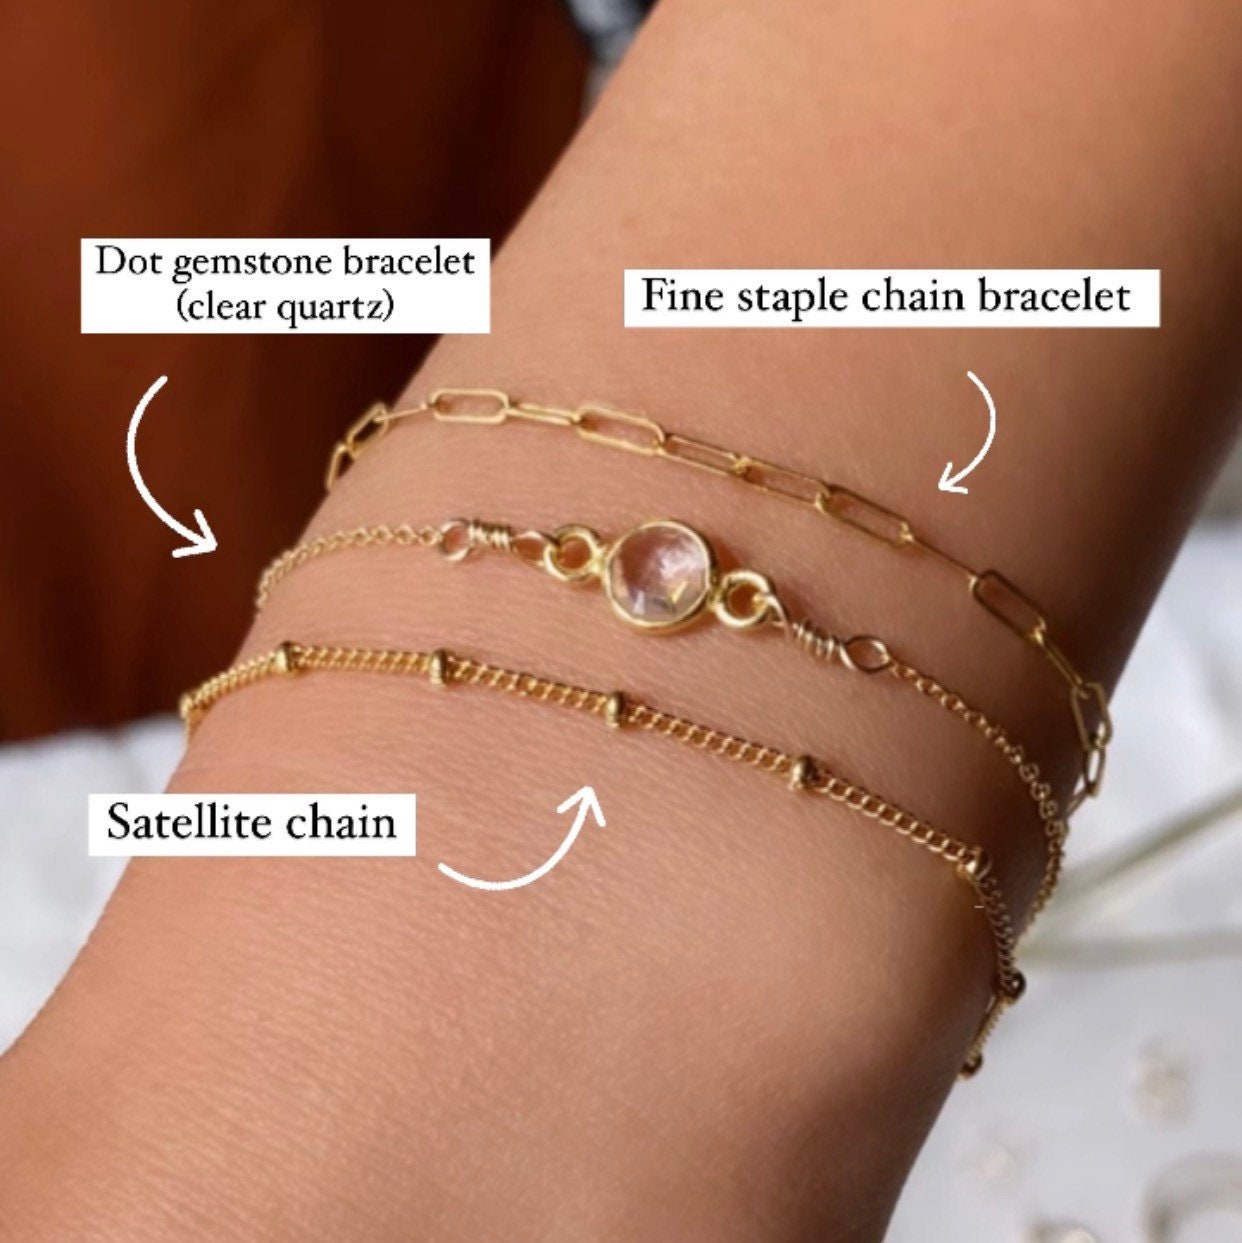 Satellite chain bracelet (14K gold-filled or sterling silver)